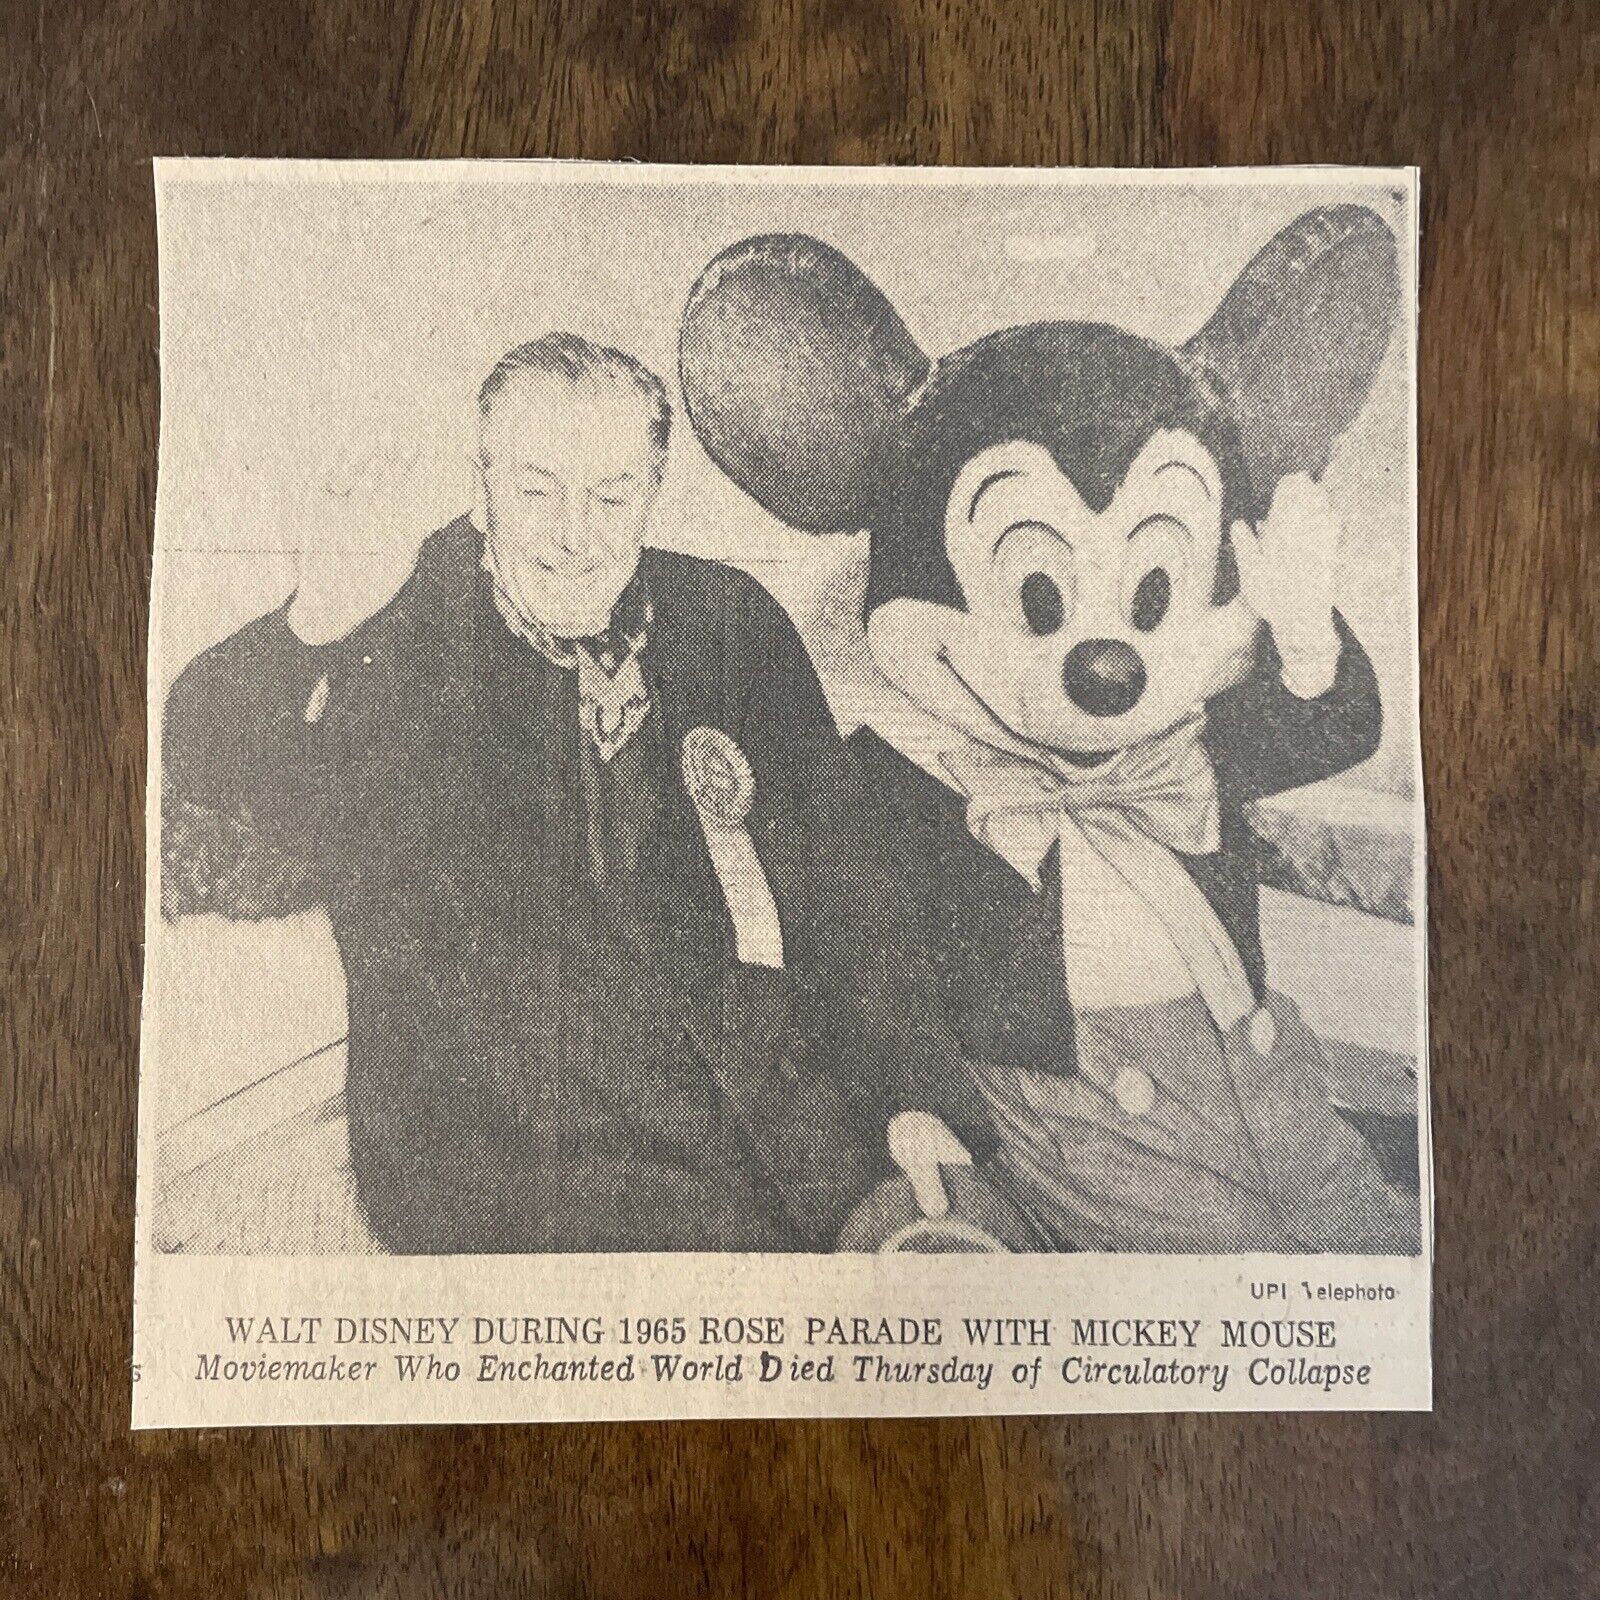 RARE Walt Disney With Mickey Mouse Newspaper Obituary Death Notice Dec 16, 1966